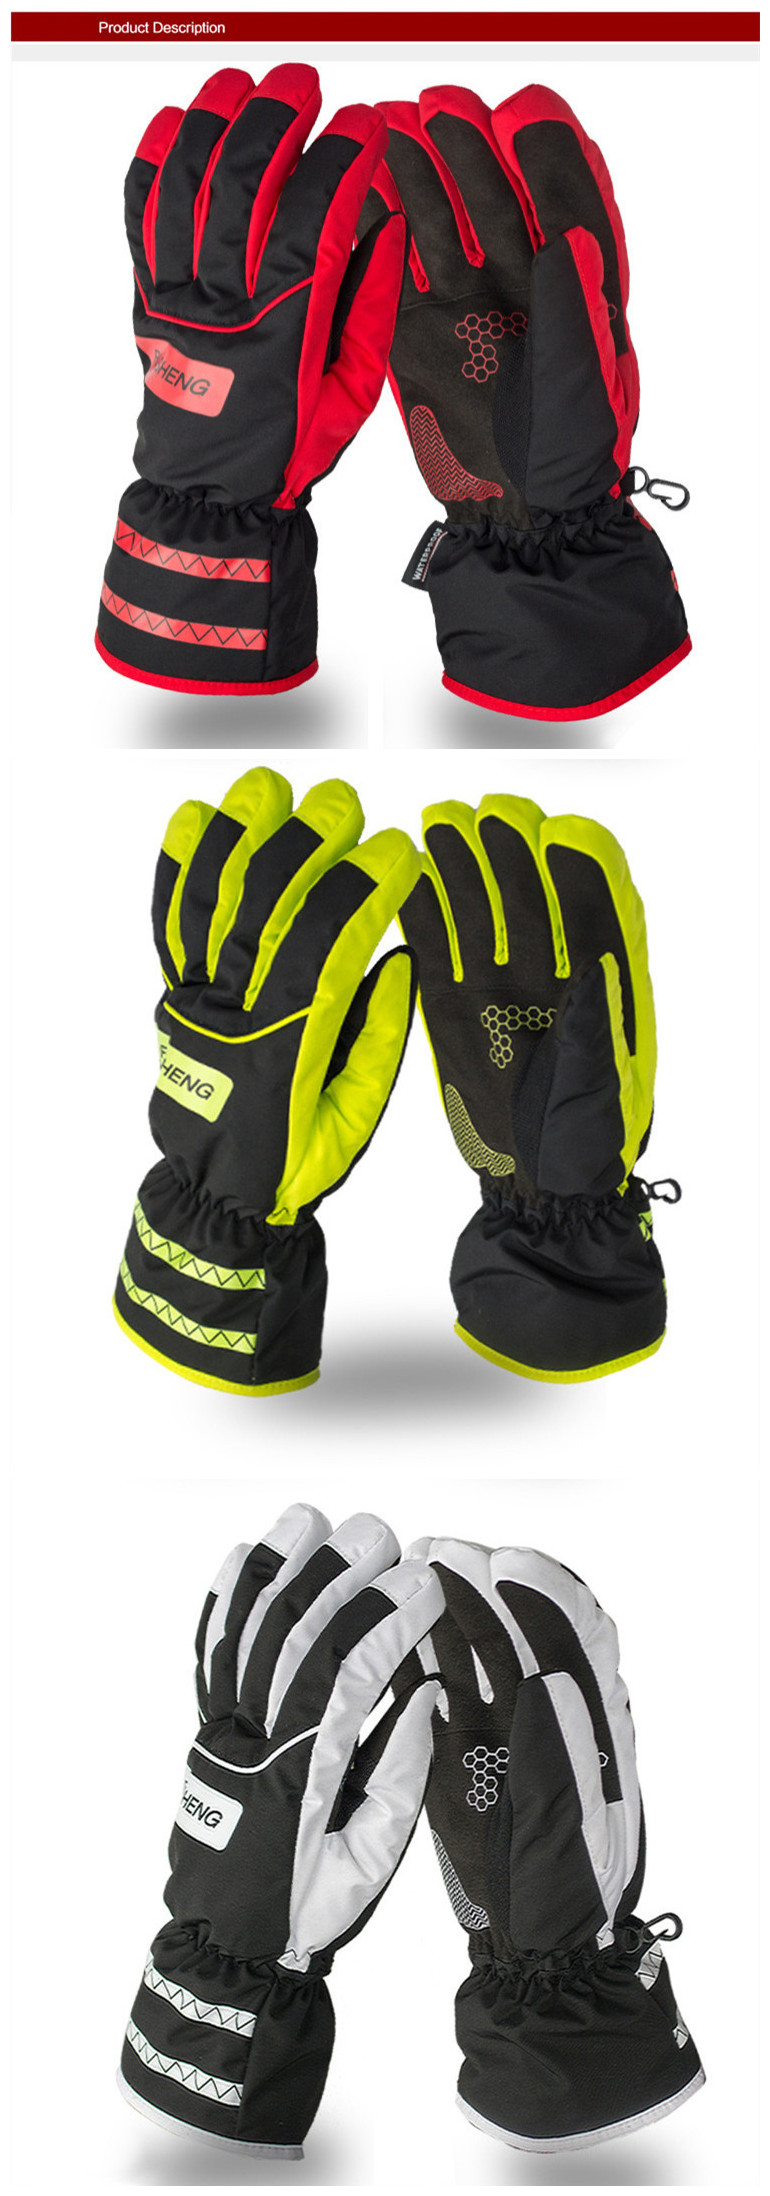 Outdoor-Winter-Warm-windproof-Gloves-Electric-Car-Waterproof-Ski-Gloves-1006733